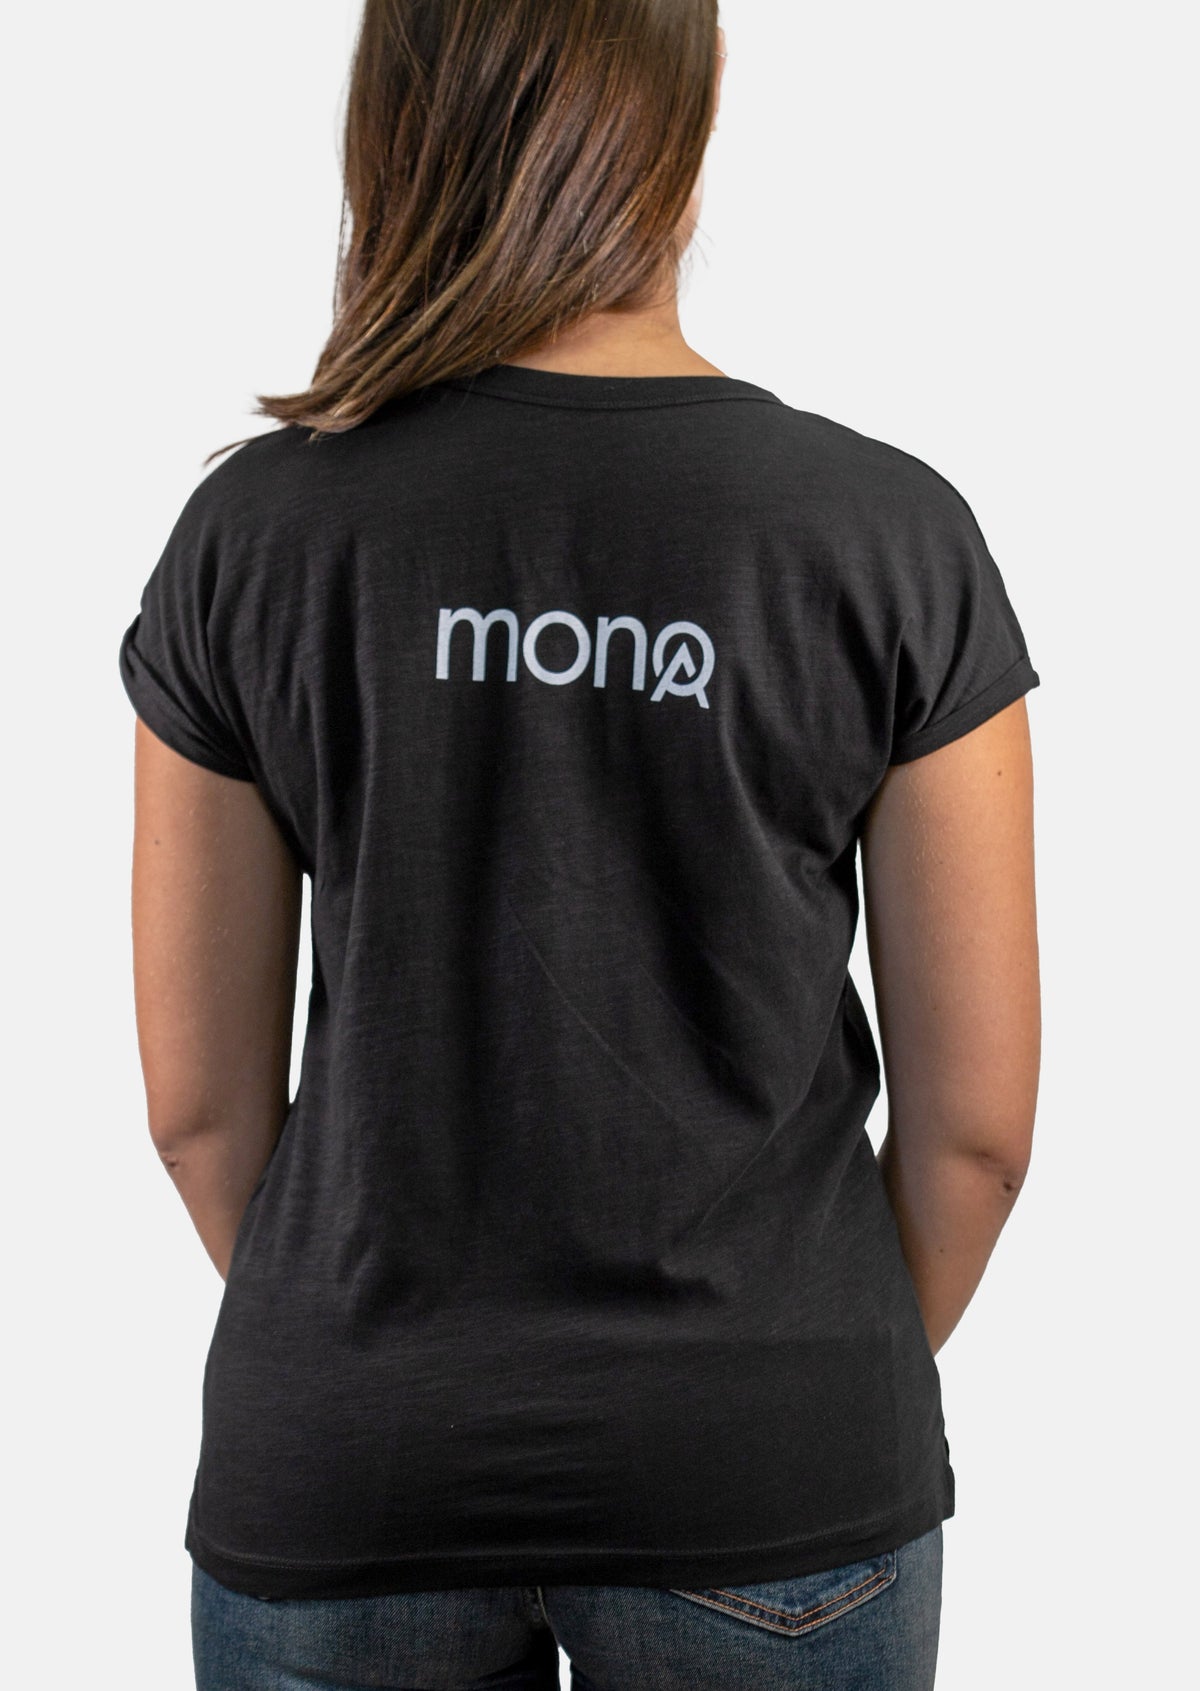 Camiseta MONOA mujer